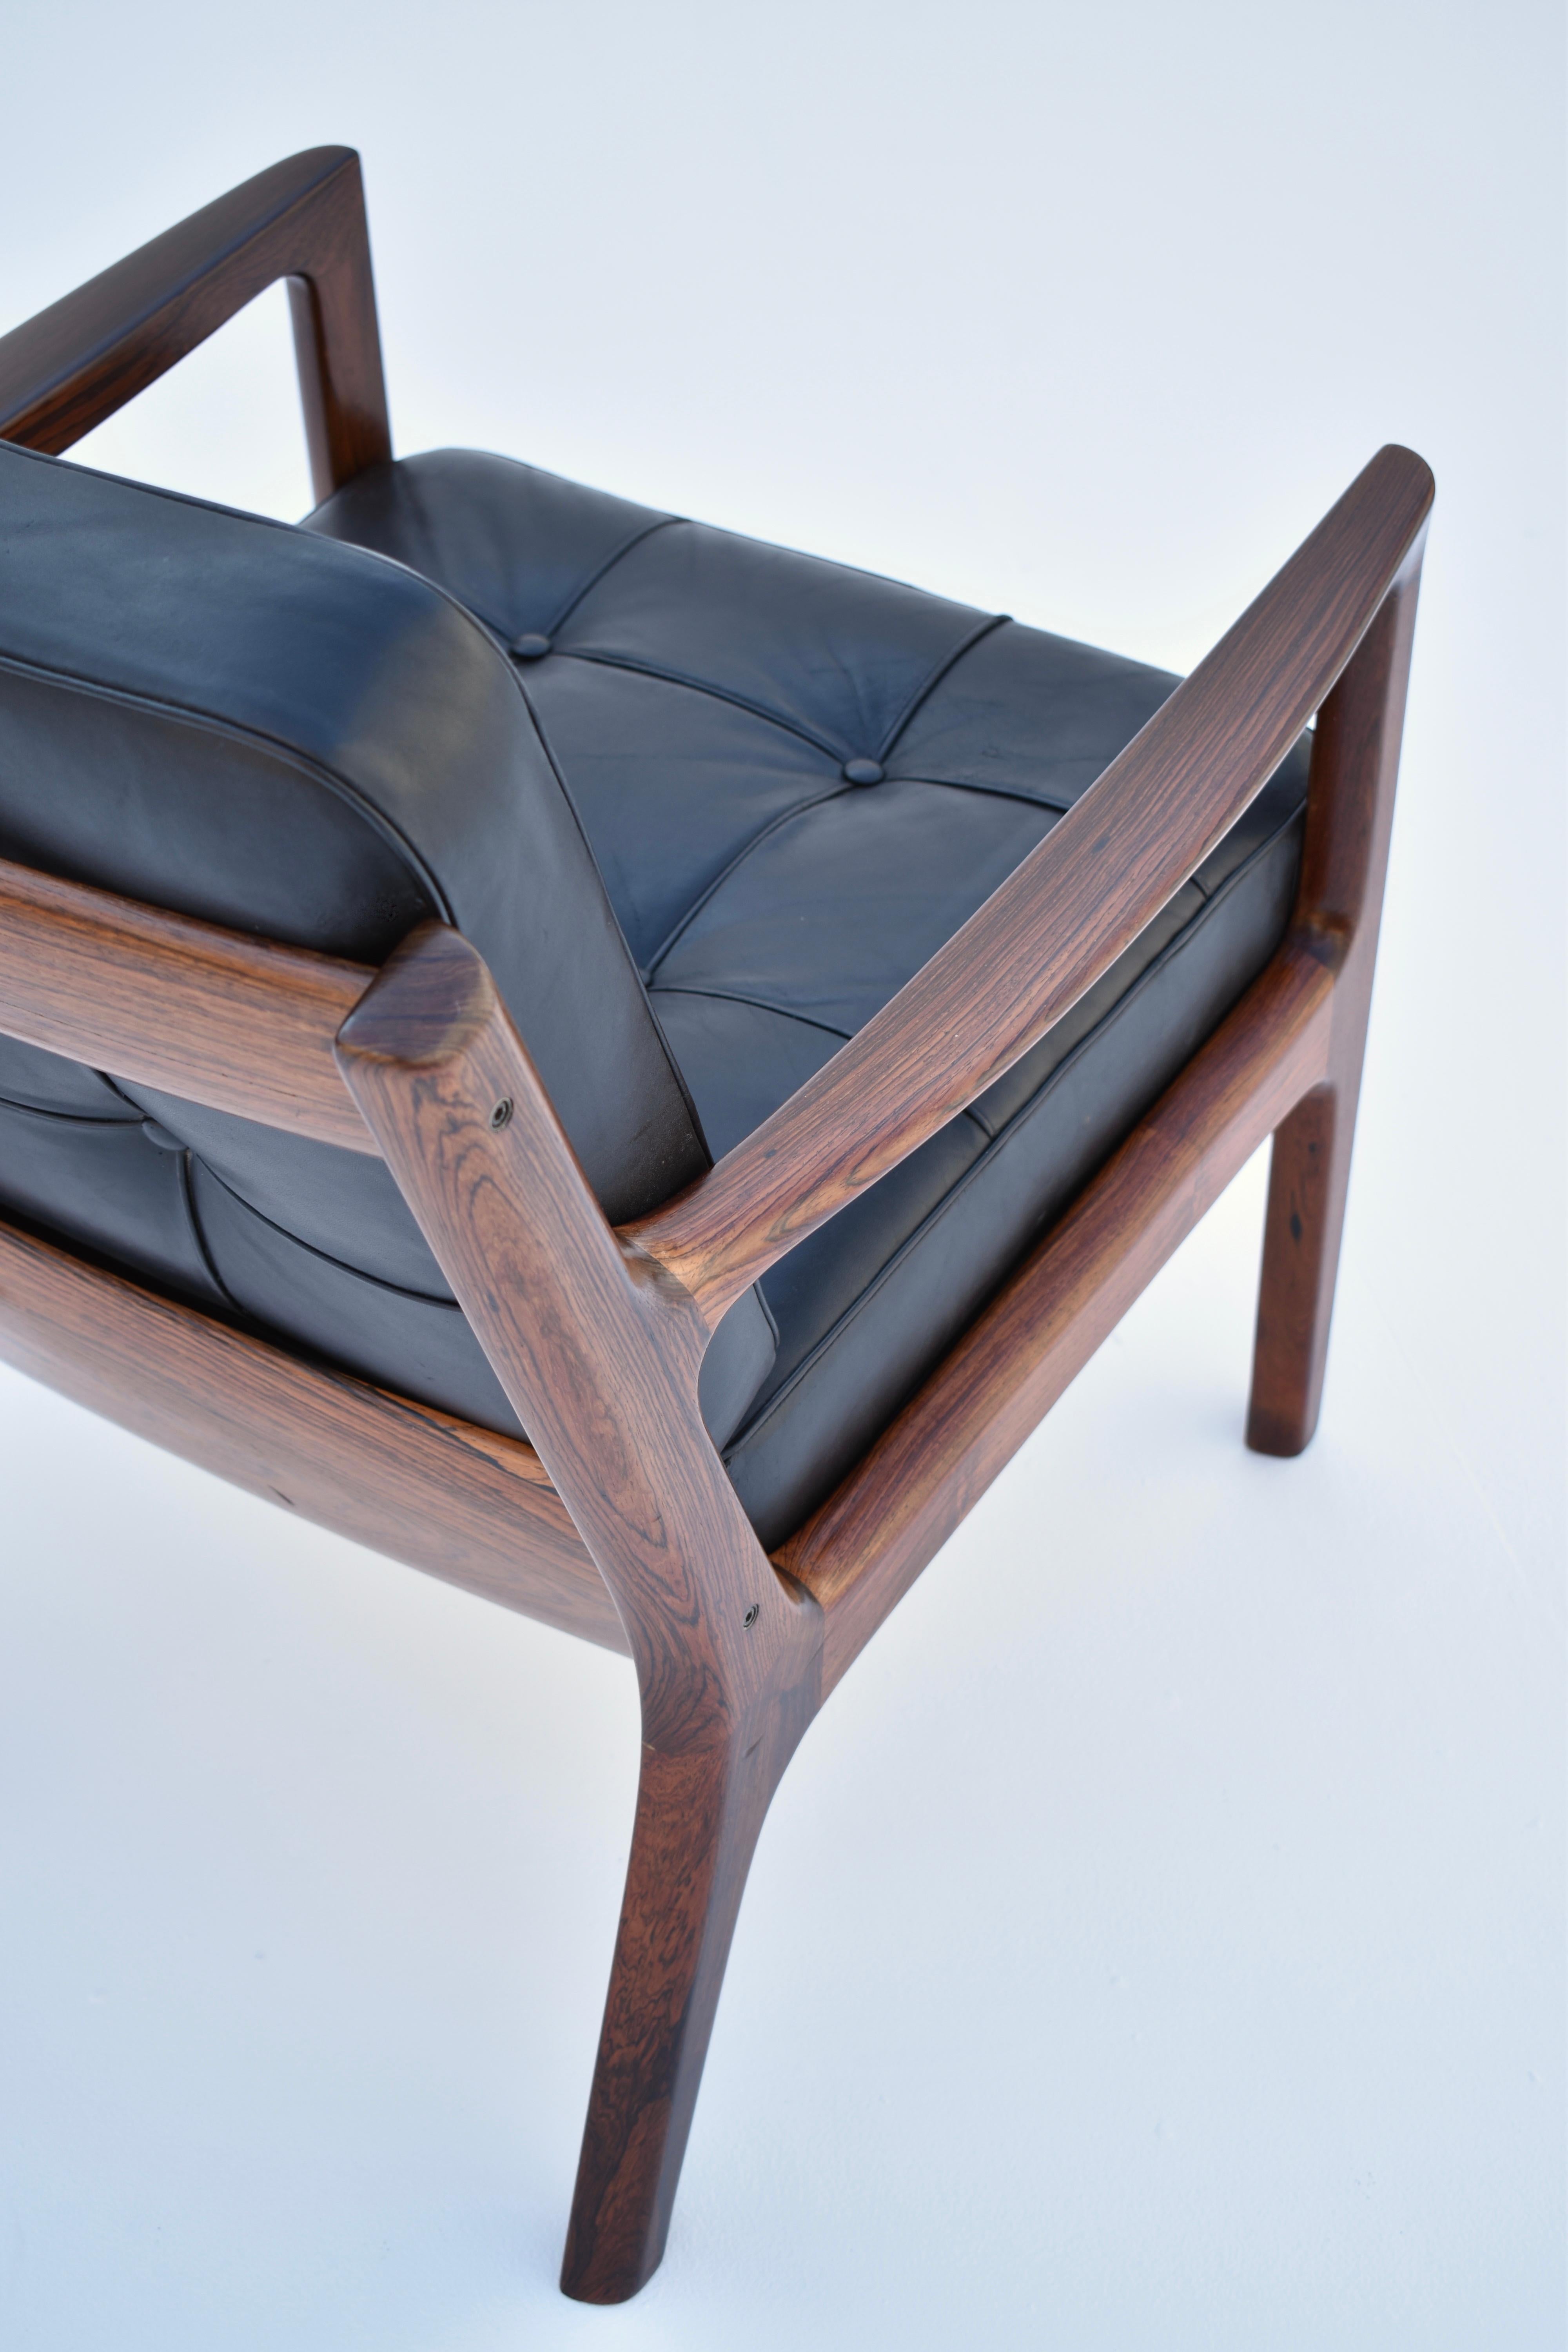 Leather Ole Wanscher Model 166 Rosewood 'Senator' Lounge Chair For France & Son, Denmark